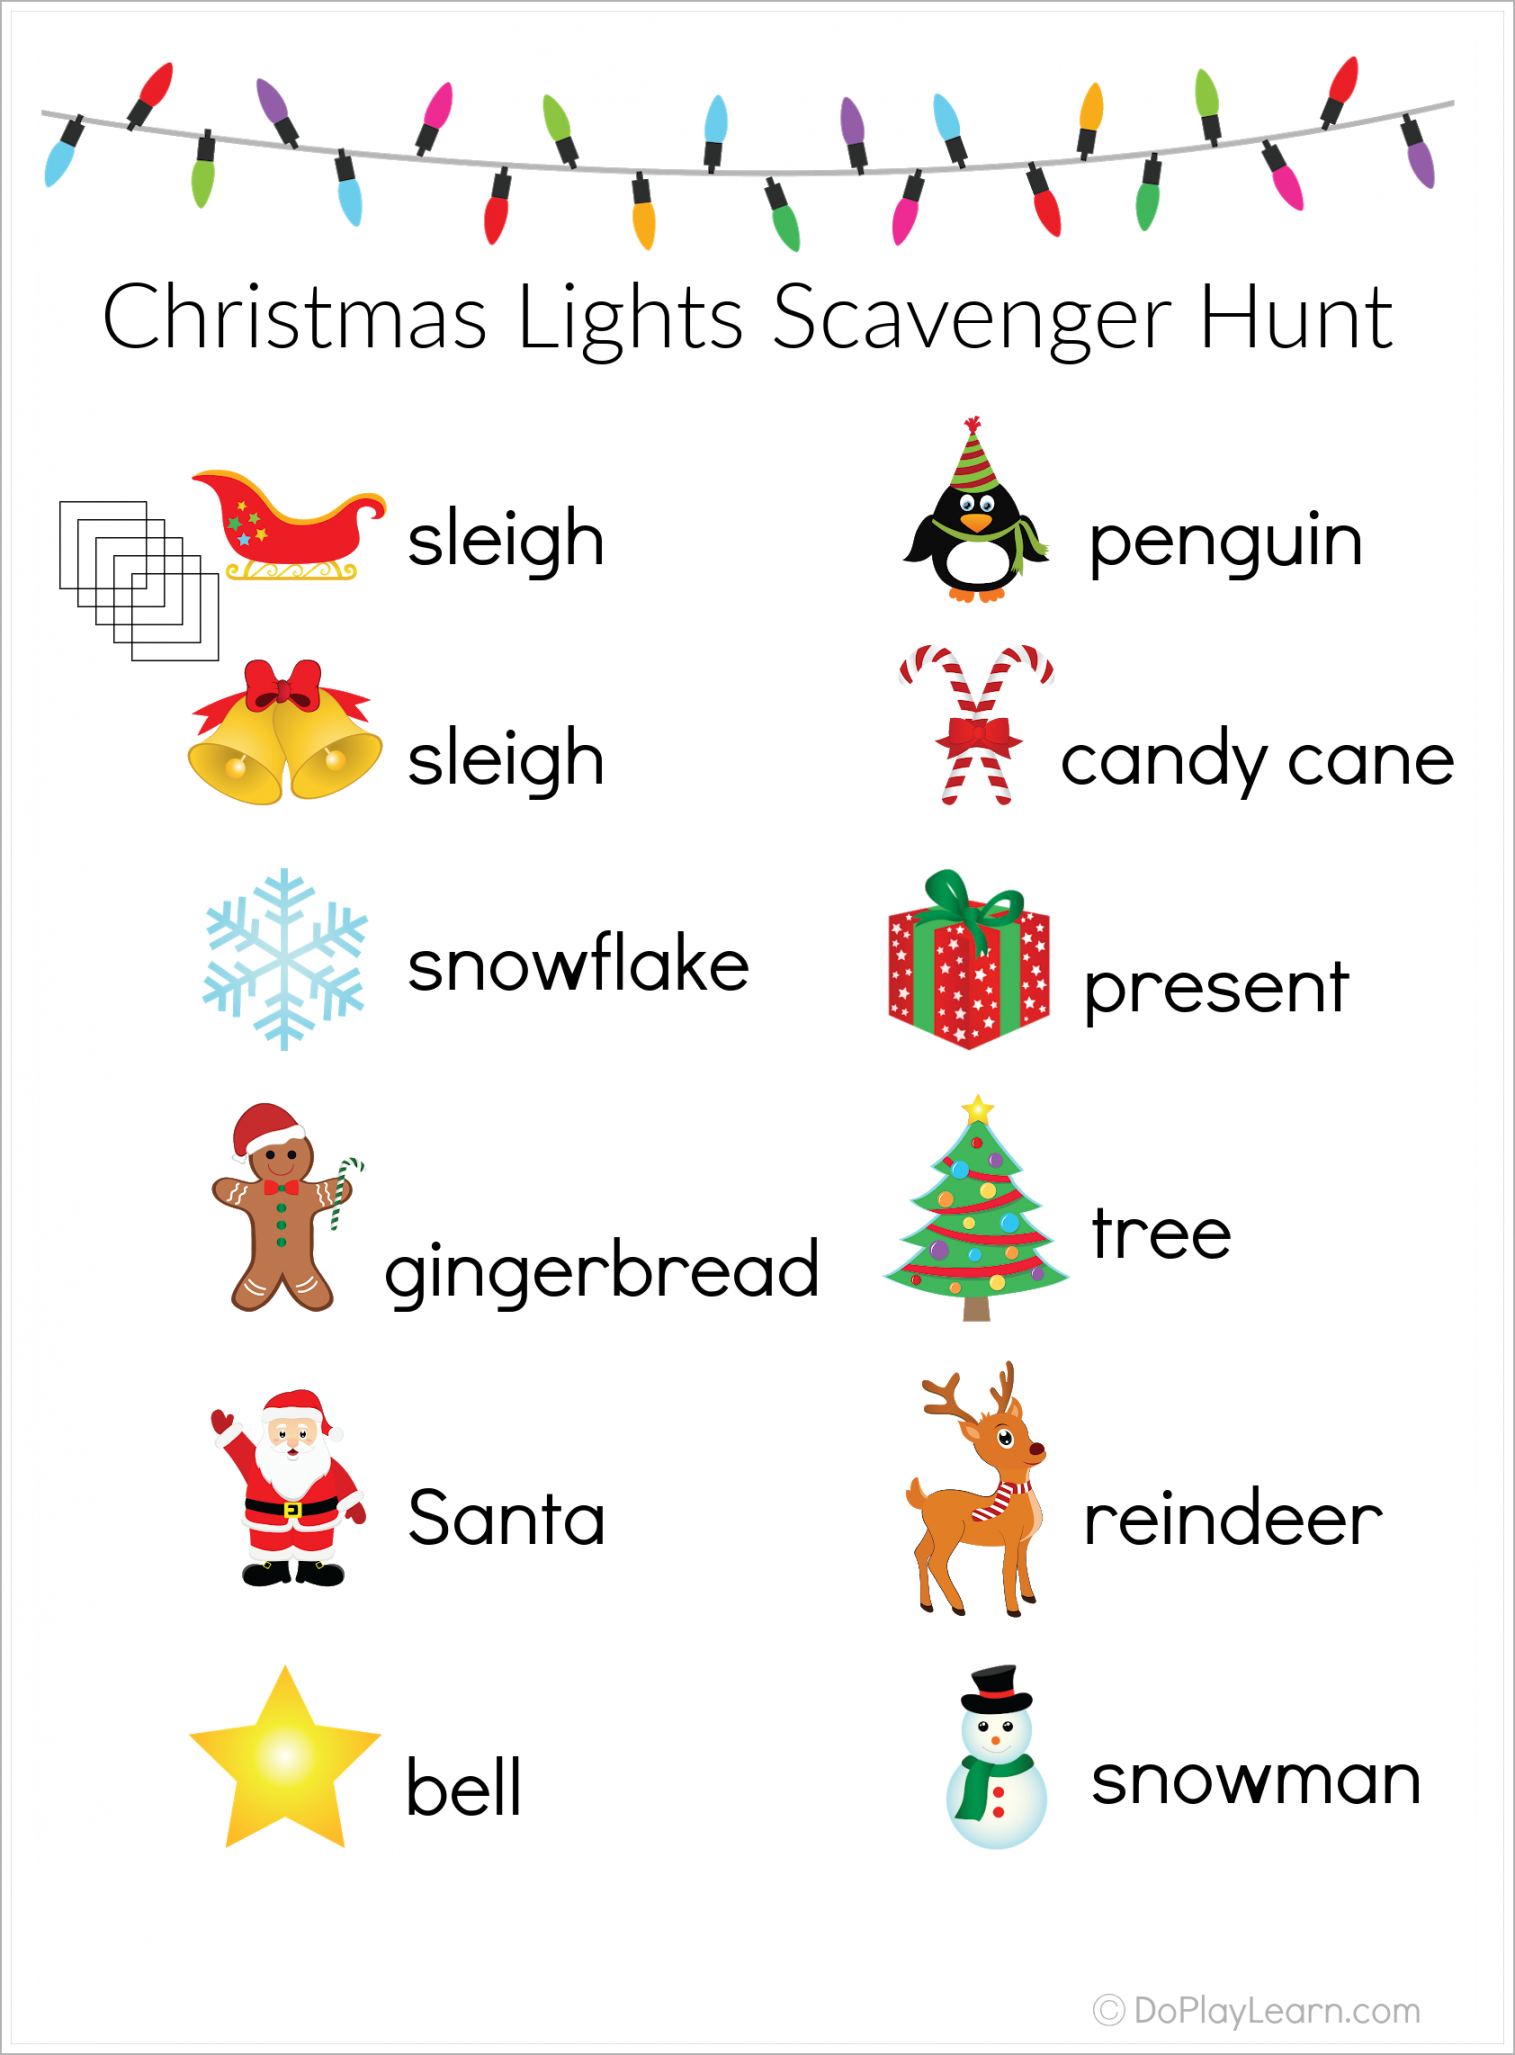 Christmas Light Scavenger Hunt Free Printable - Do Play Learn - FREE Printables - Christmas Light Scavenger Hunt Free Printable